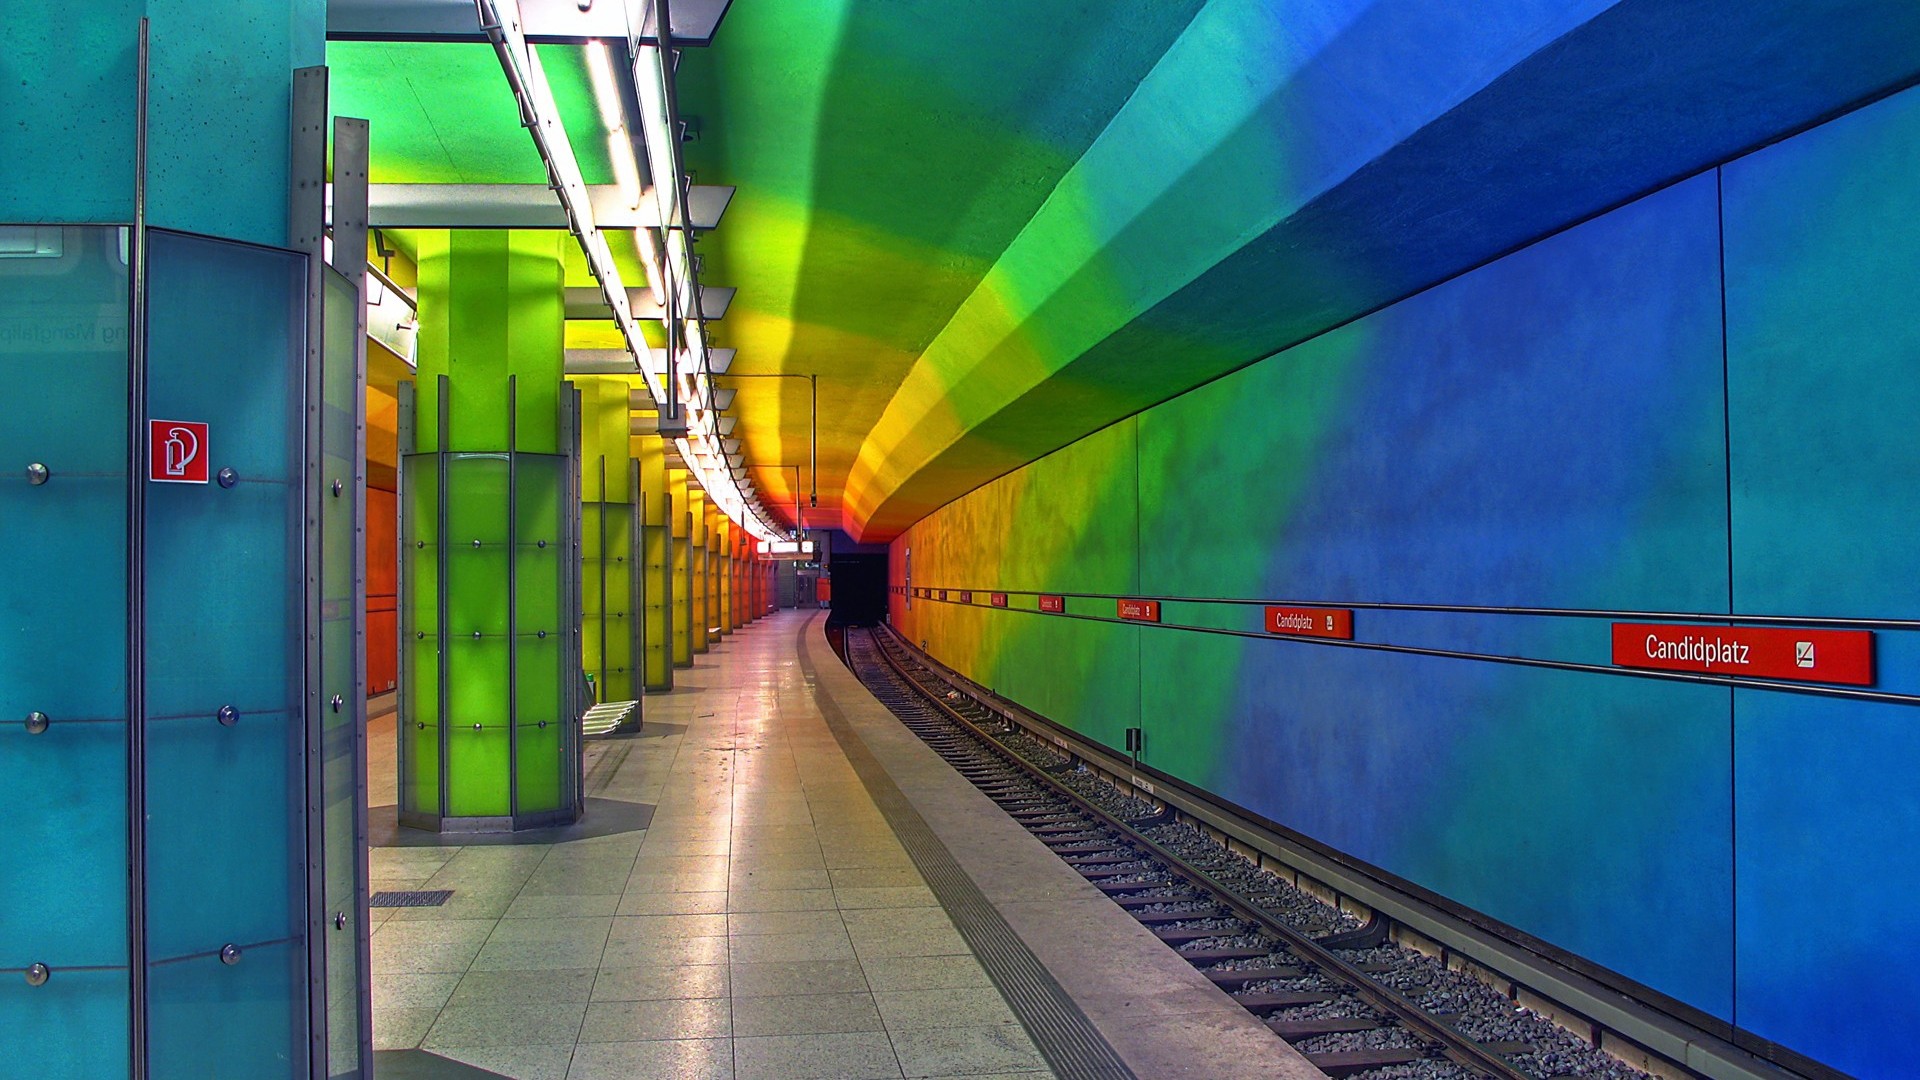 Включи крутую станцию. Мюнхен: станция Candidplatz. Лиссабон метро красивые станции. Станция метро Гамла стан. Красивые станции Московского метрополитена.